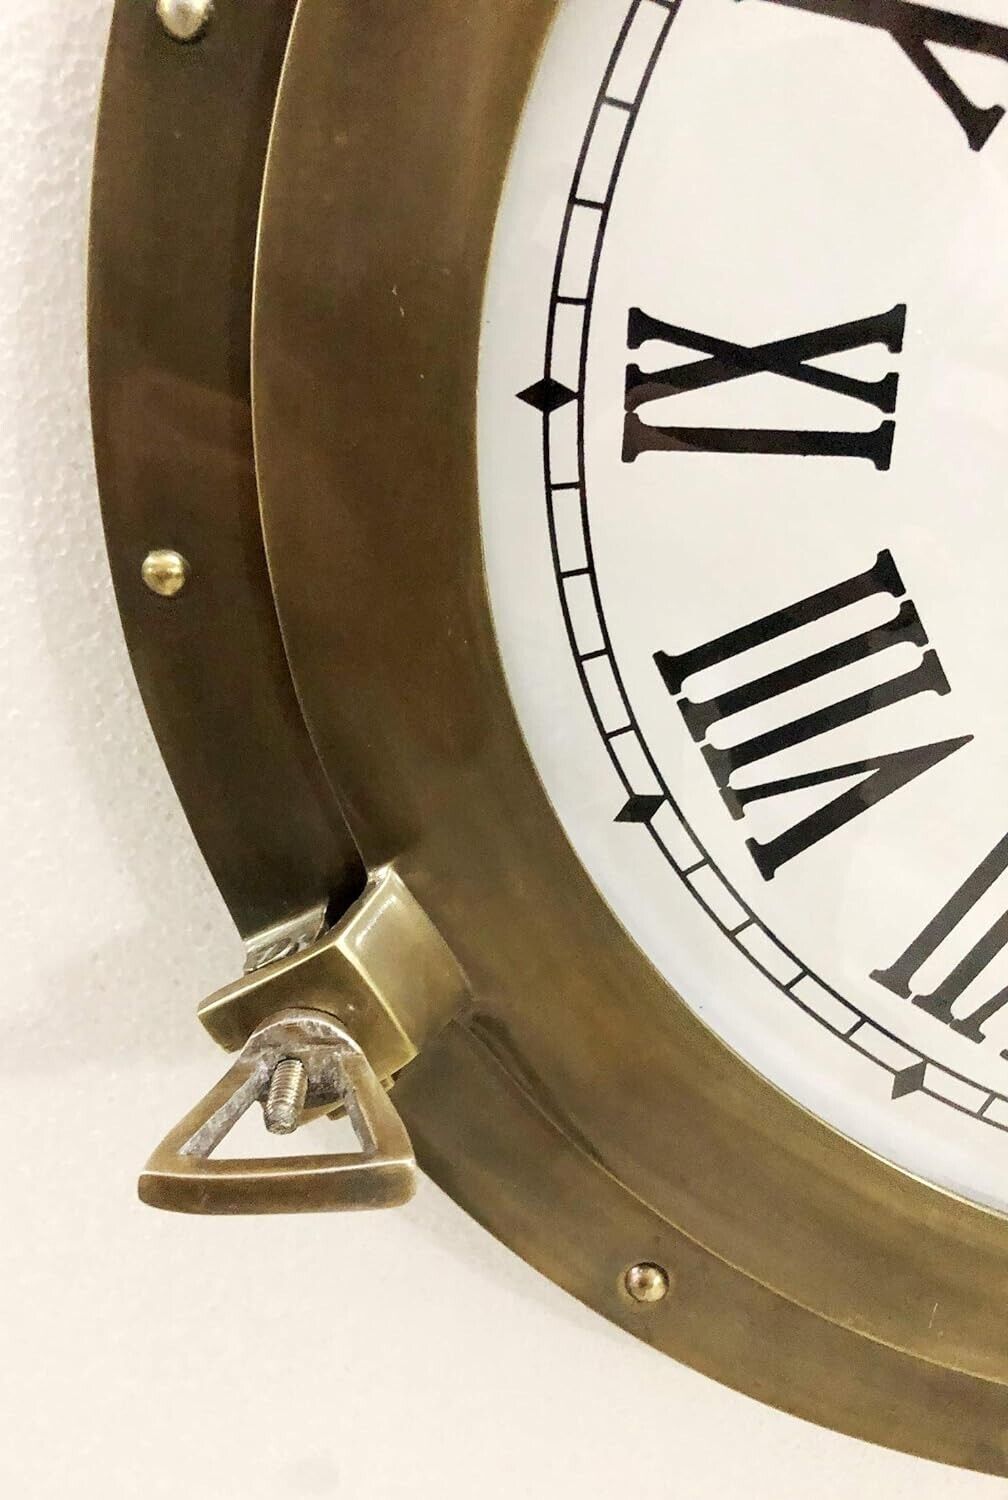 brass ship porthole clock 22.86 cm